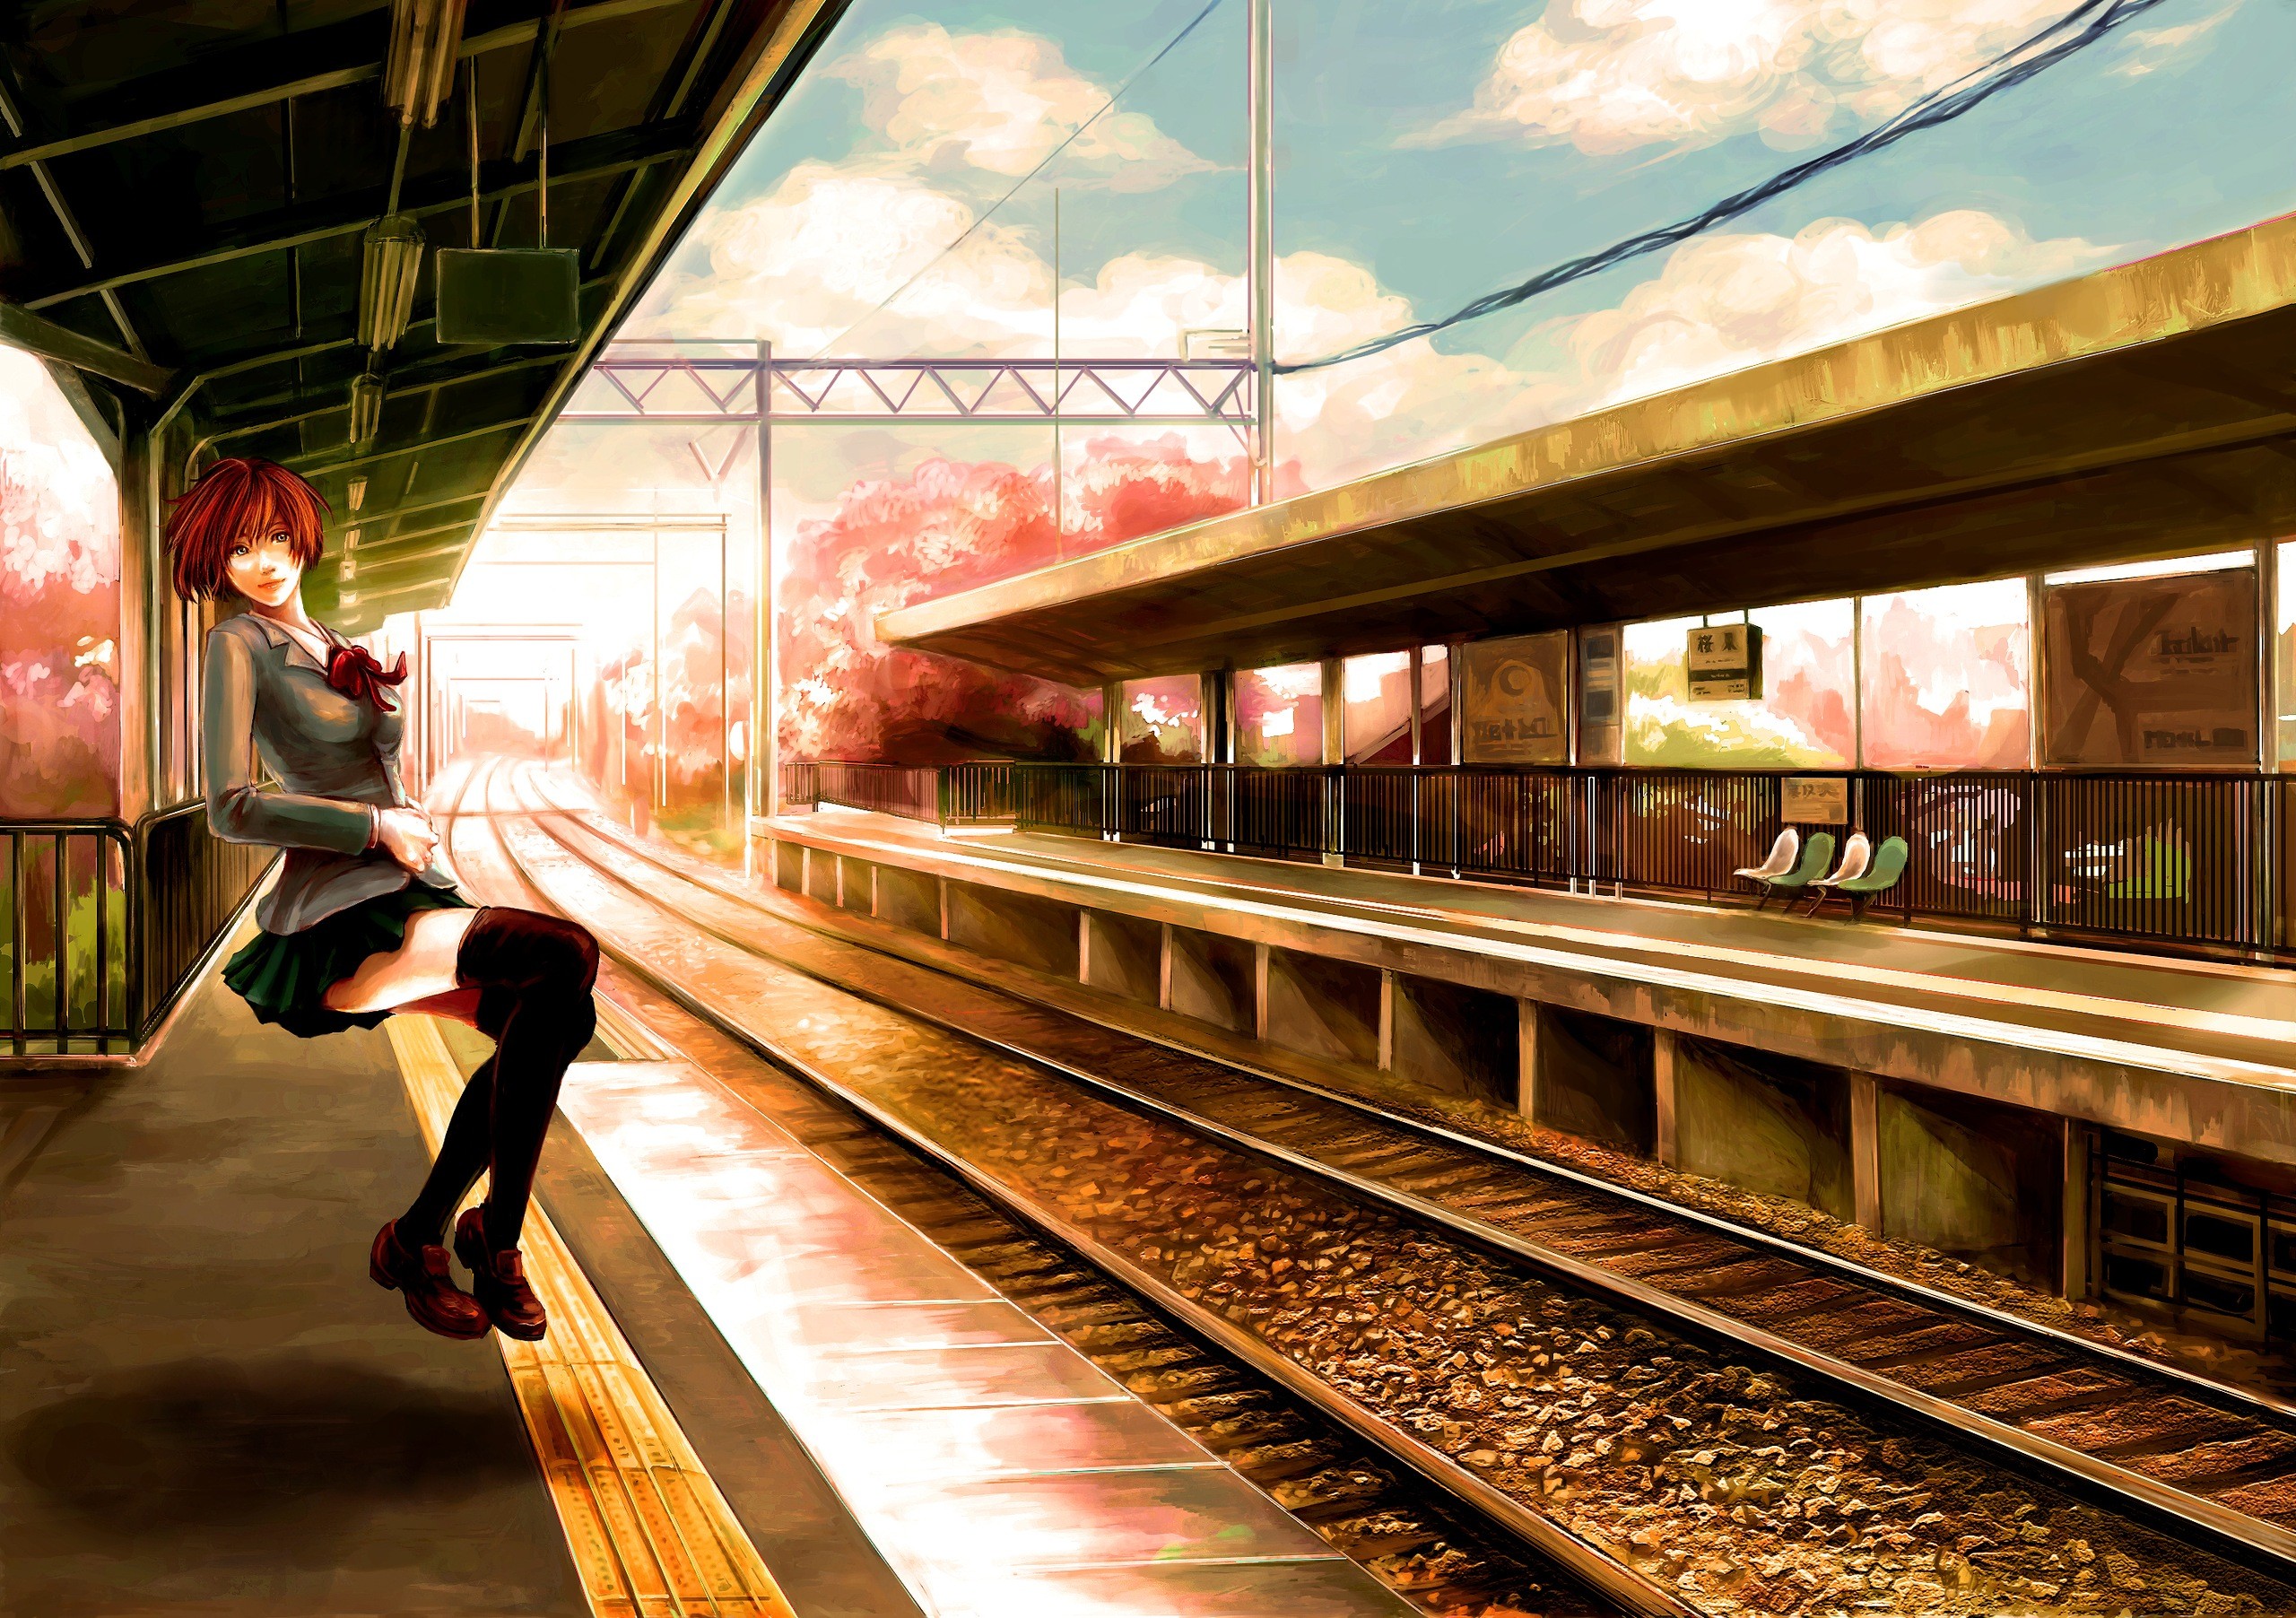 Anime 2560x1804 manga anime girls railway anime floating train station looking at viewer miniskirt stockings digital art redhead clouds sky short hair closed mouth black stockings sunlight